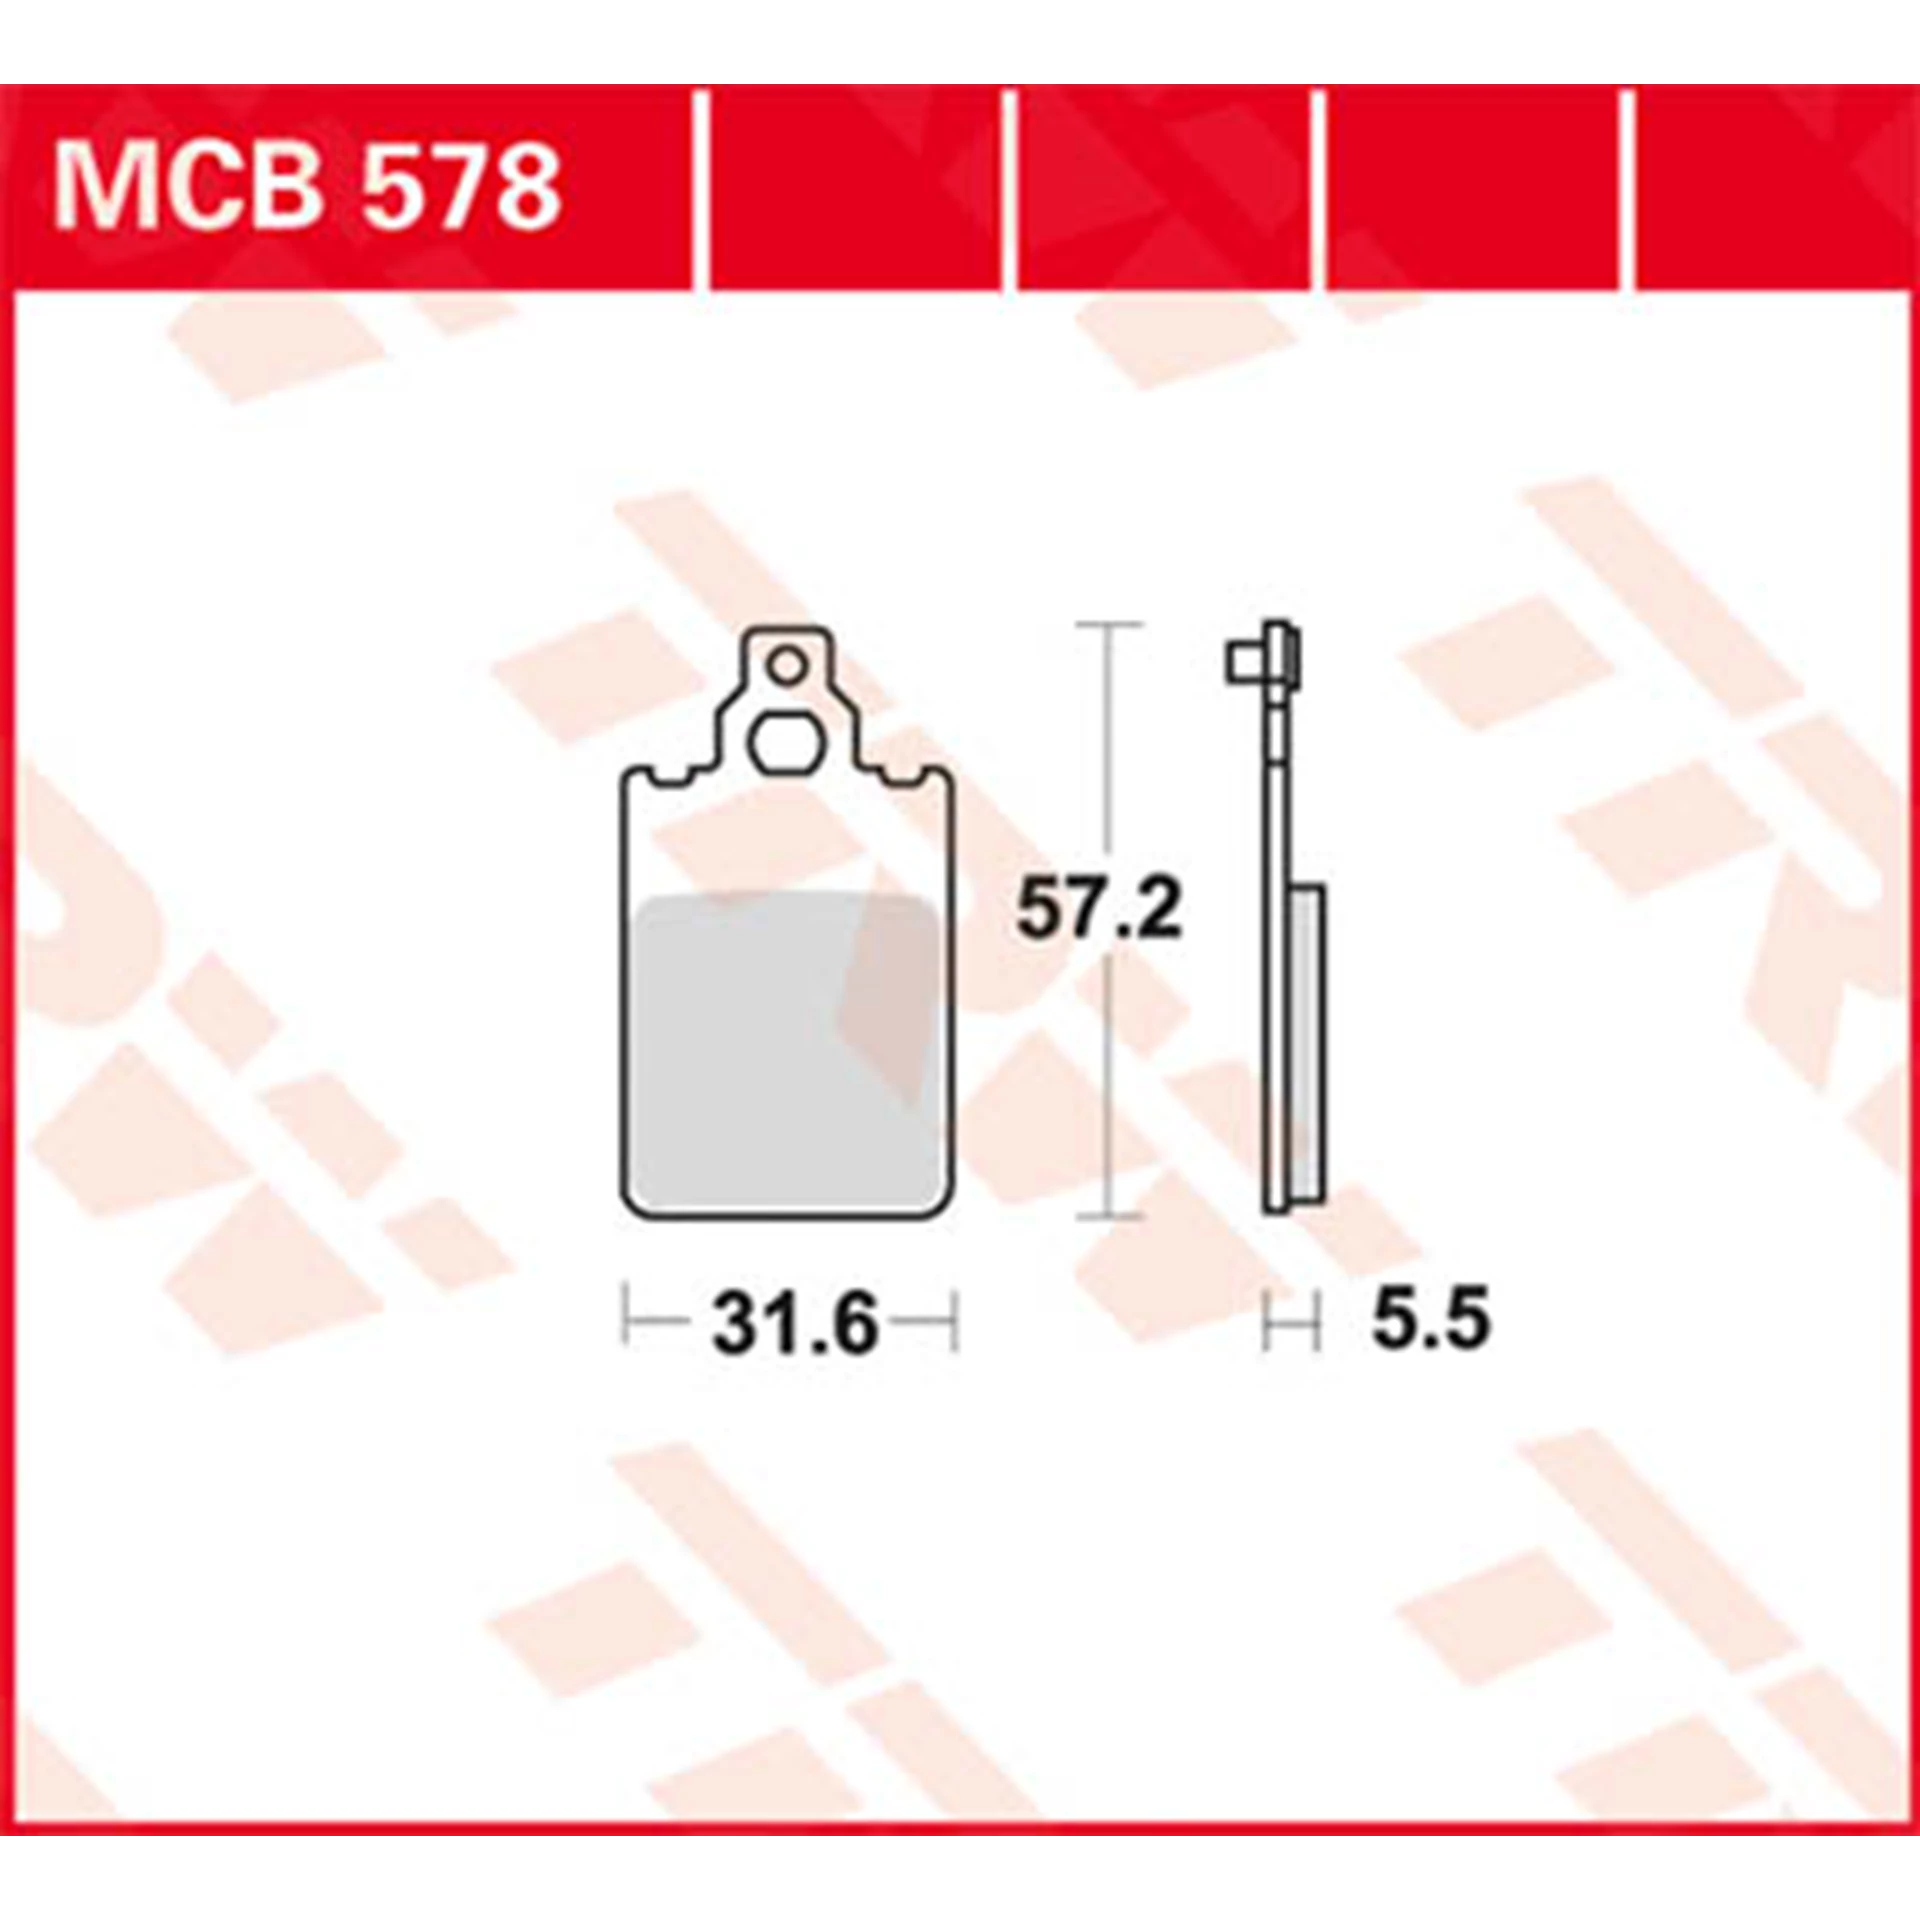 MCB578.jpg